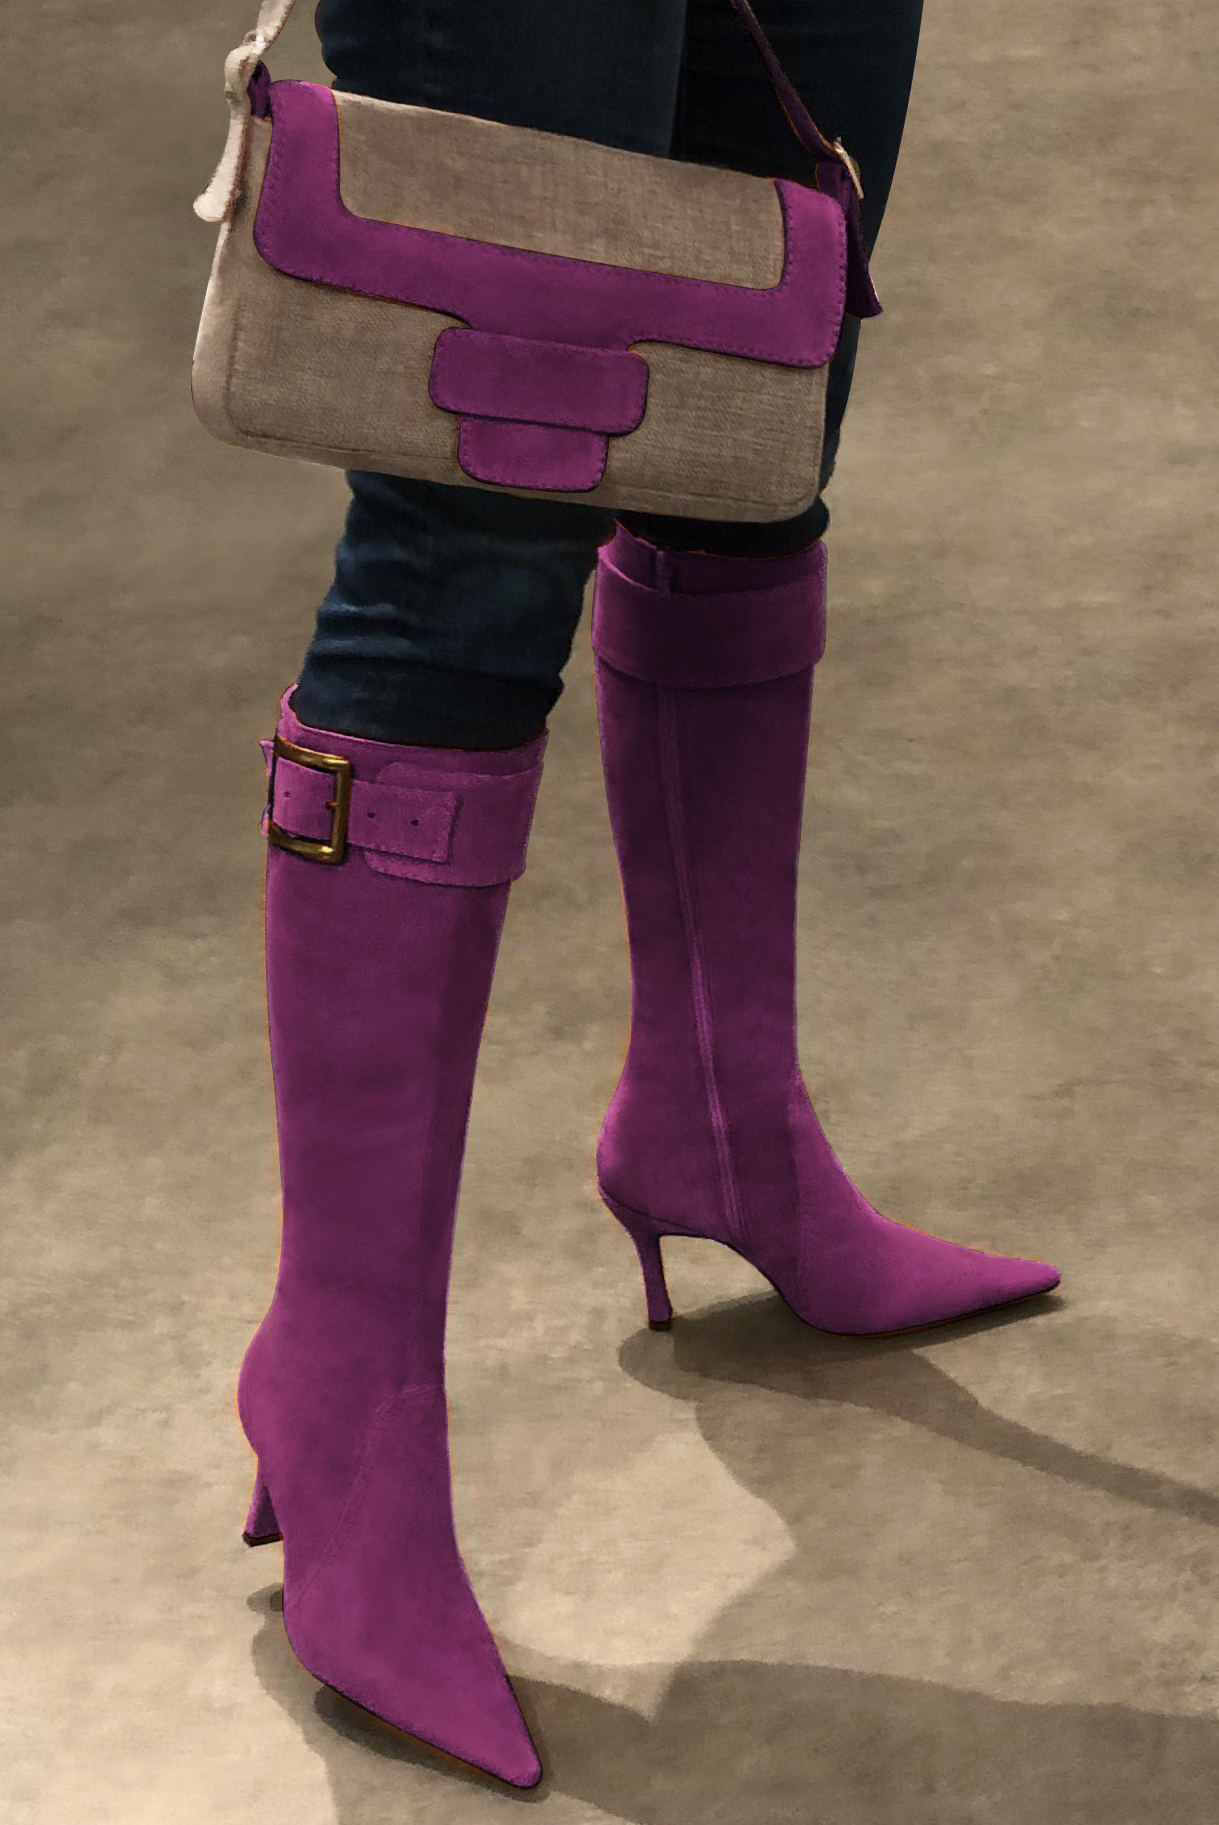 Mulberry purple women's feminine knee-high boots. Pointed toe. Very high spool heels. Made to measure. Worn view - Florence KOOIJMAN